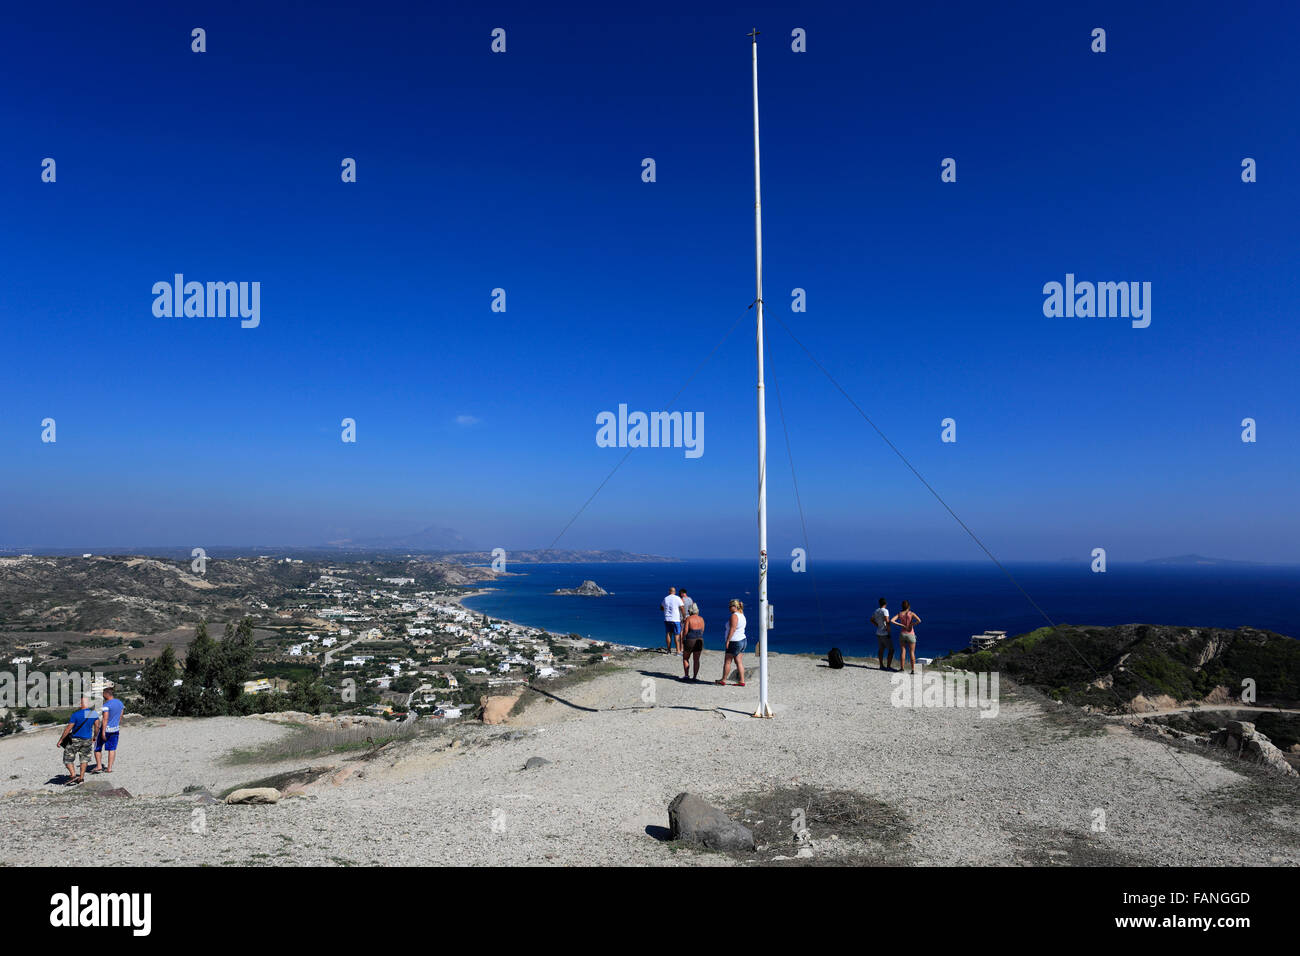 Panoramic view over Kefalos Bay, Kefalos town, Kos Island, Dodecanese group of islands, South Aegean Sea, Greece. Stock Photo